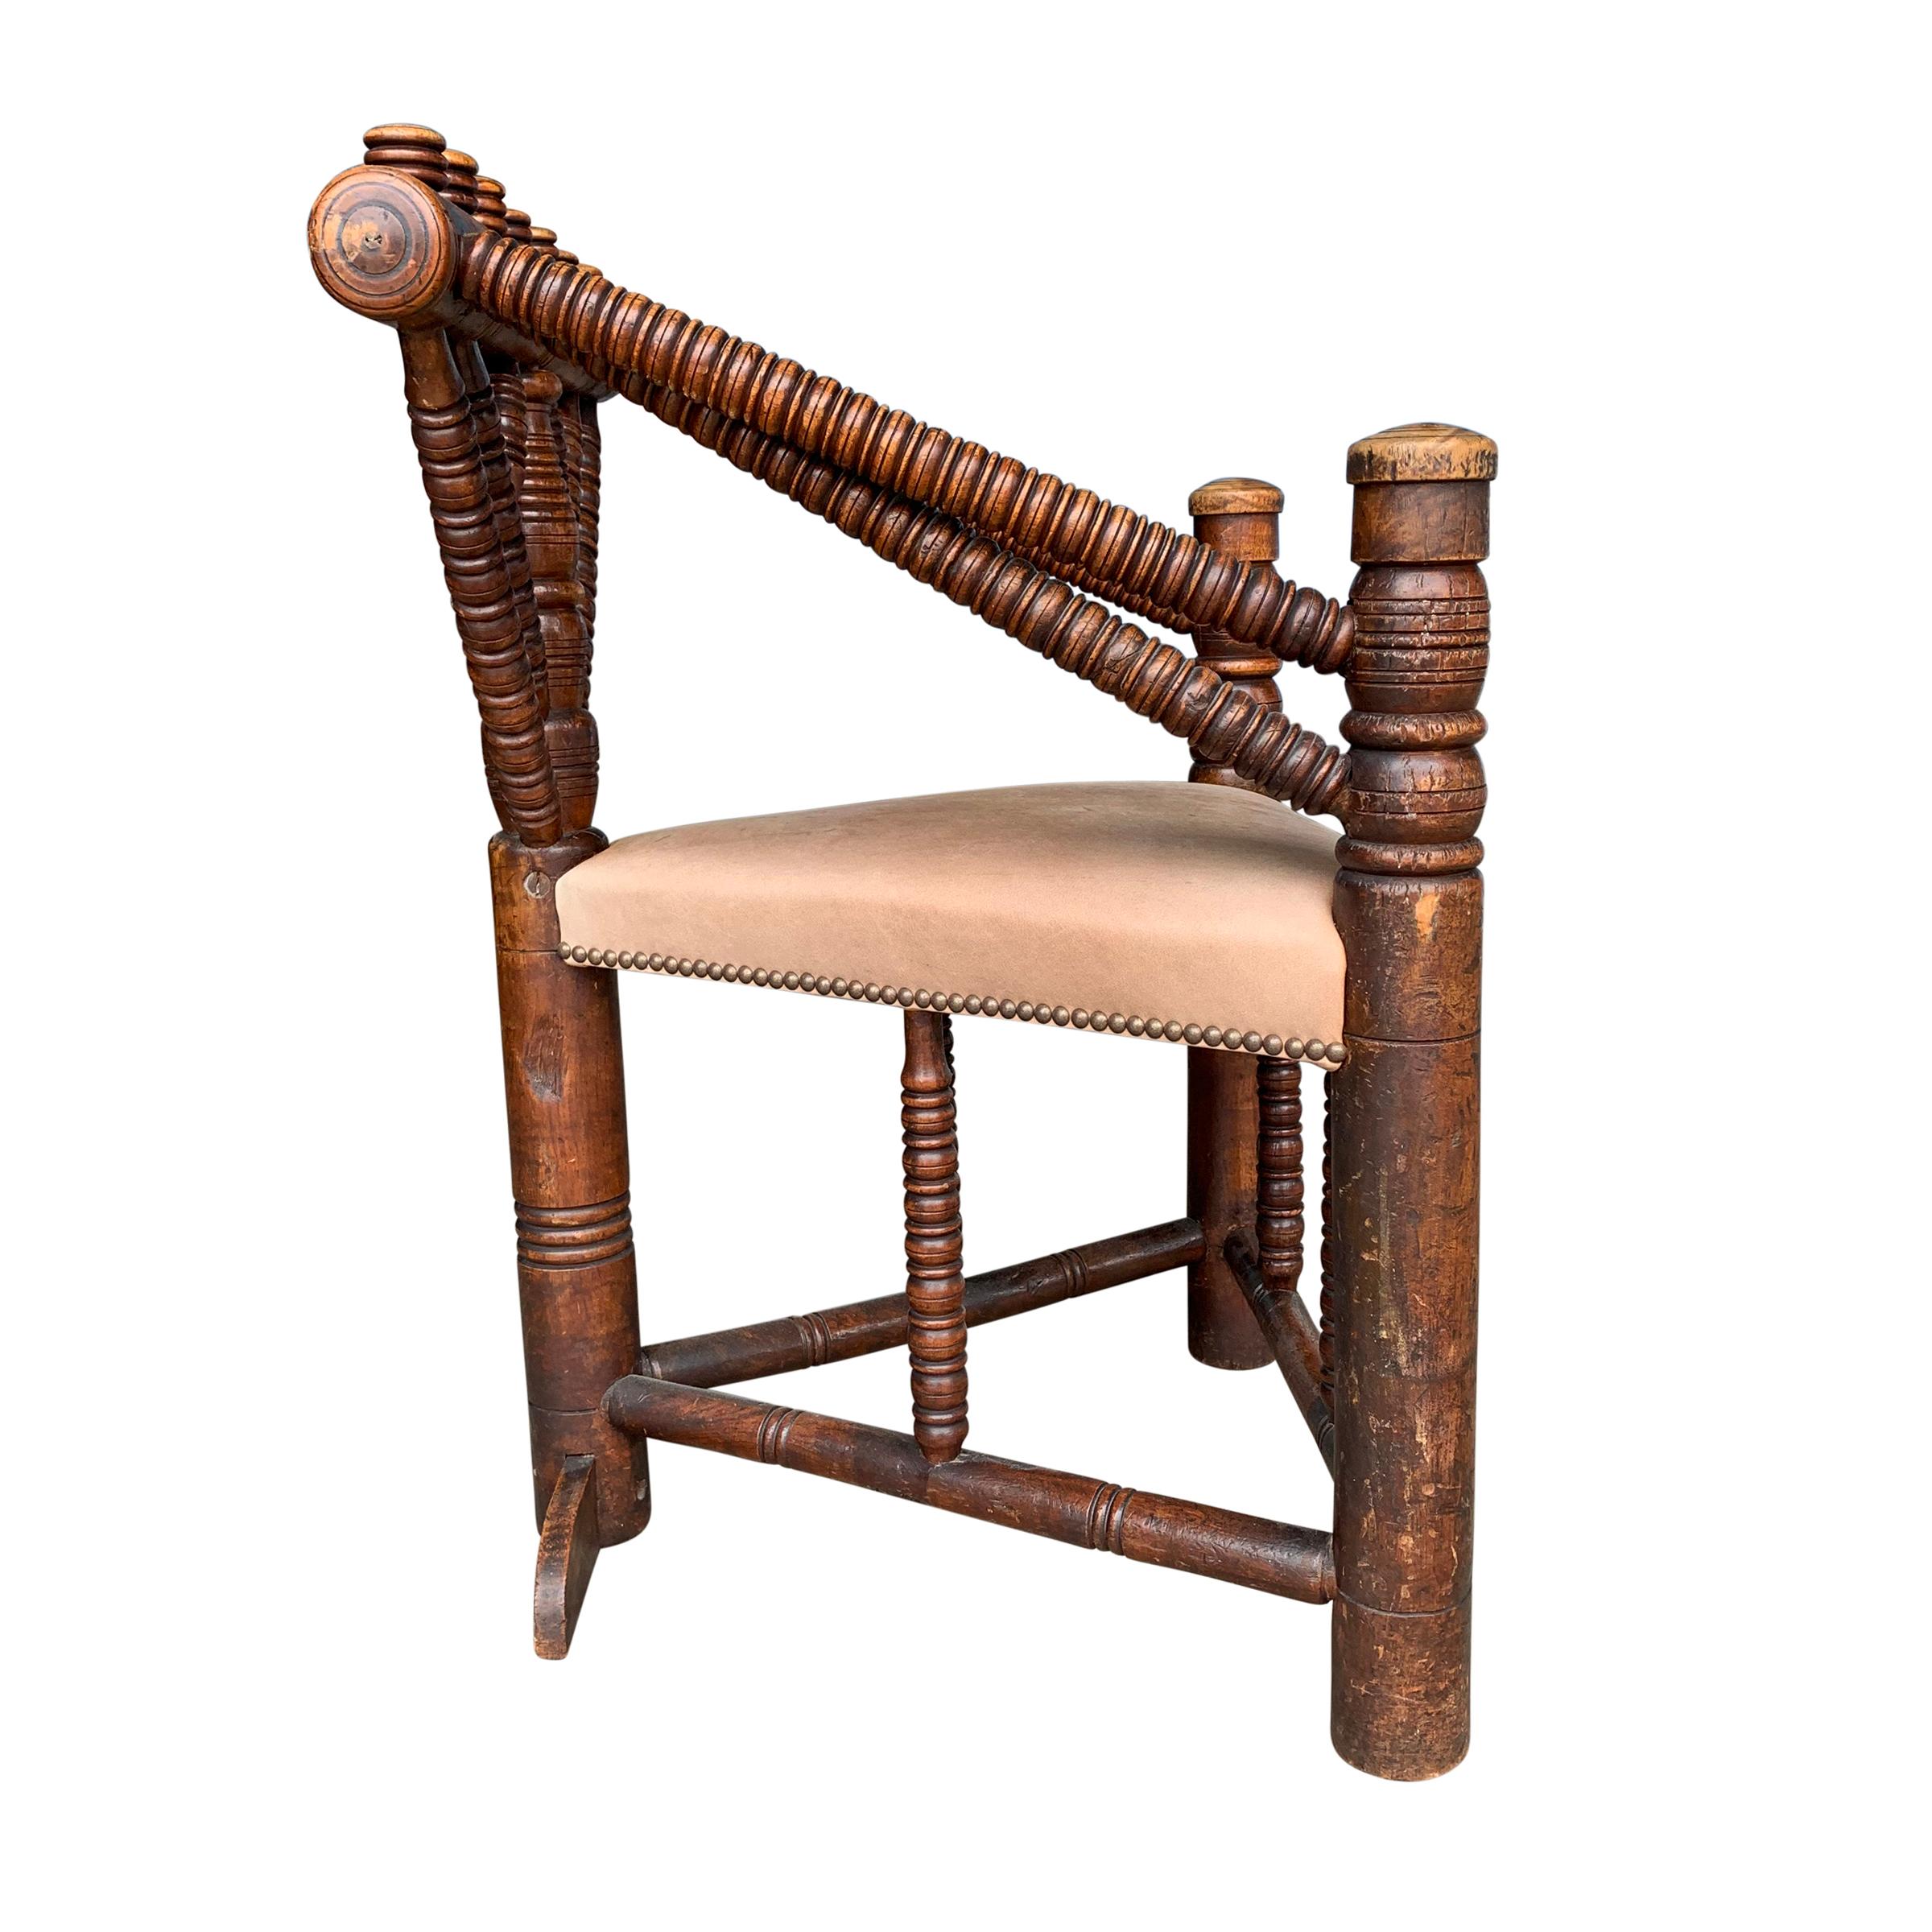 Folk Art 18th Century English Turner's Chair